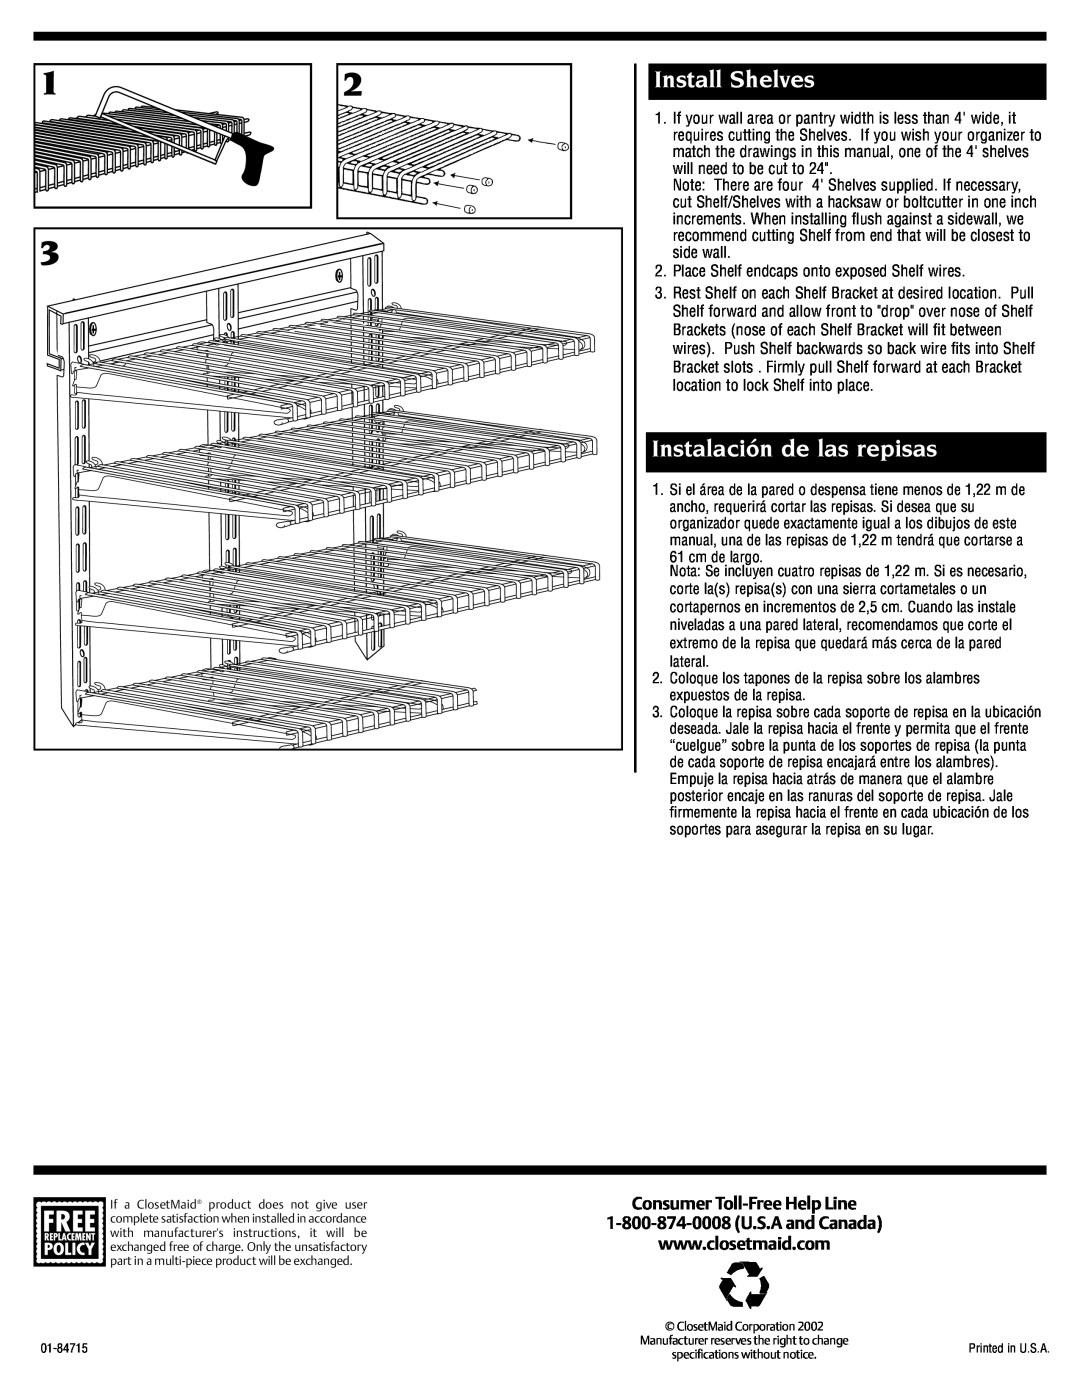 Closet Maid 2894 installation instructions Install Shelves, Instalación de las repisas, Consumer Toll-FreeHelp Line 